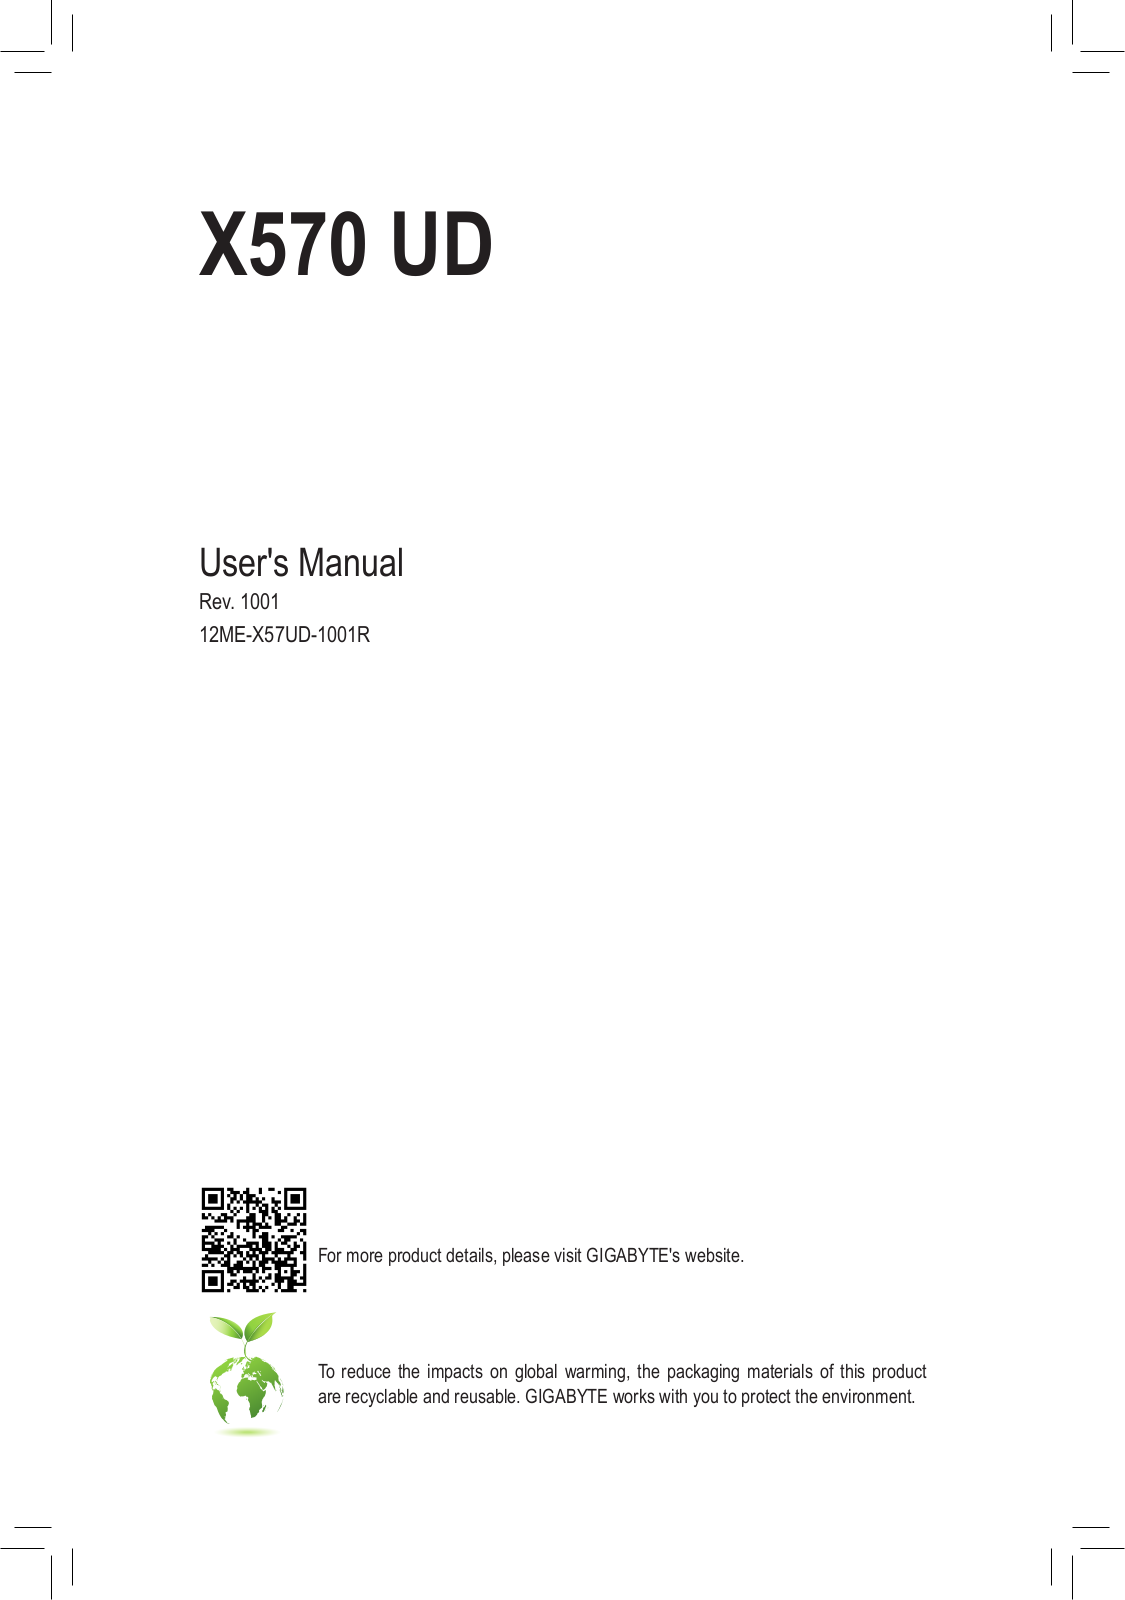 Gigabyte X570 UD User Manual